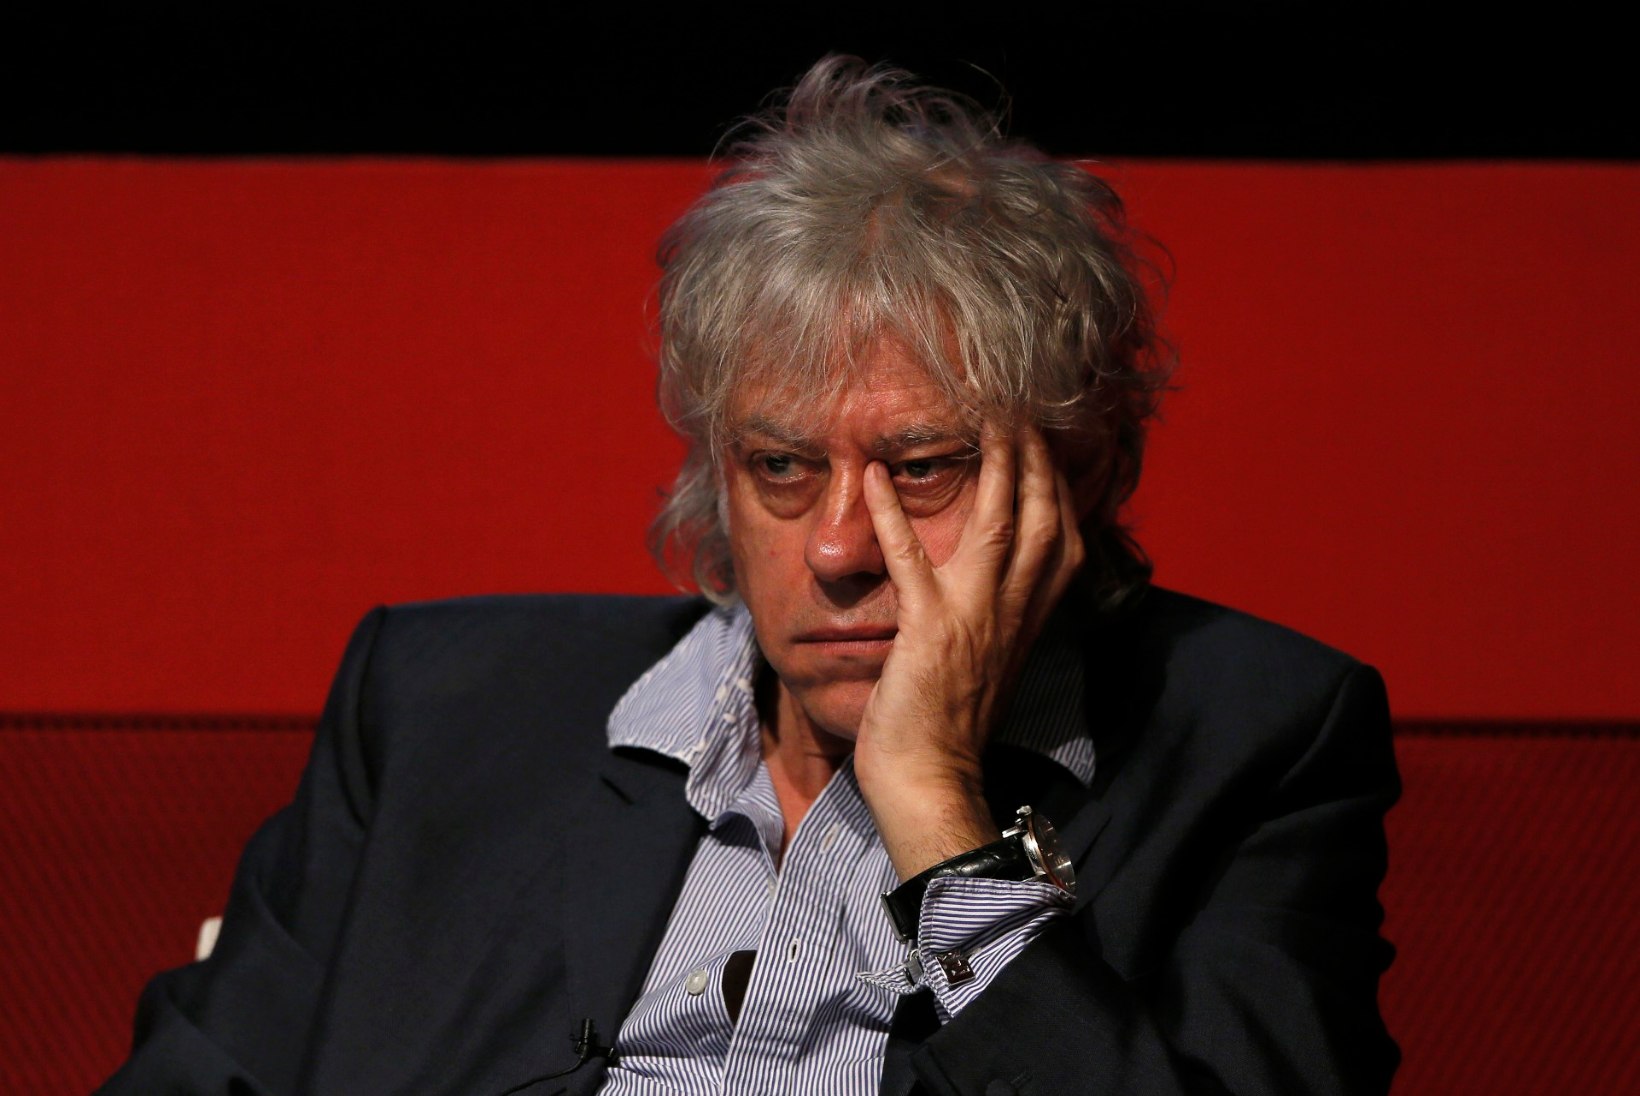 Bob Geldof aimas ette, et tema tütar lõpetab elu noorelt